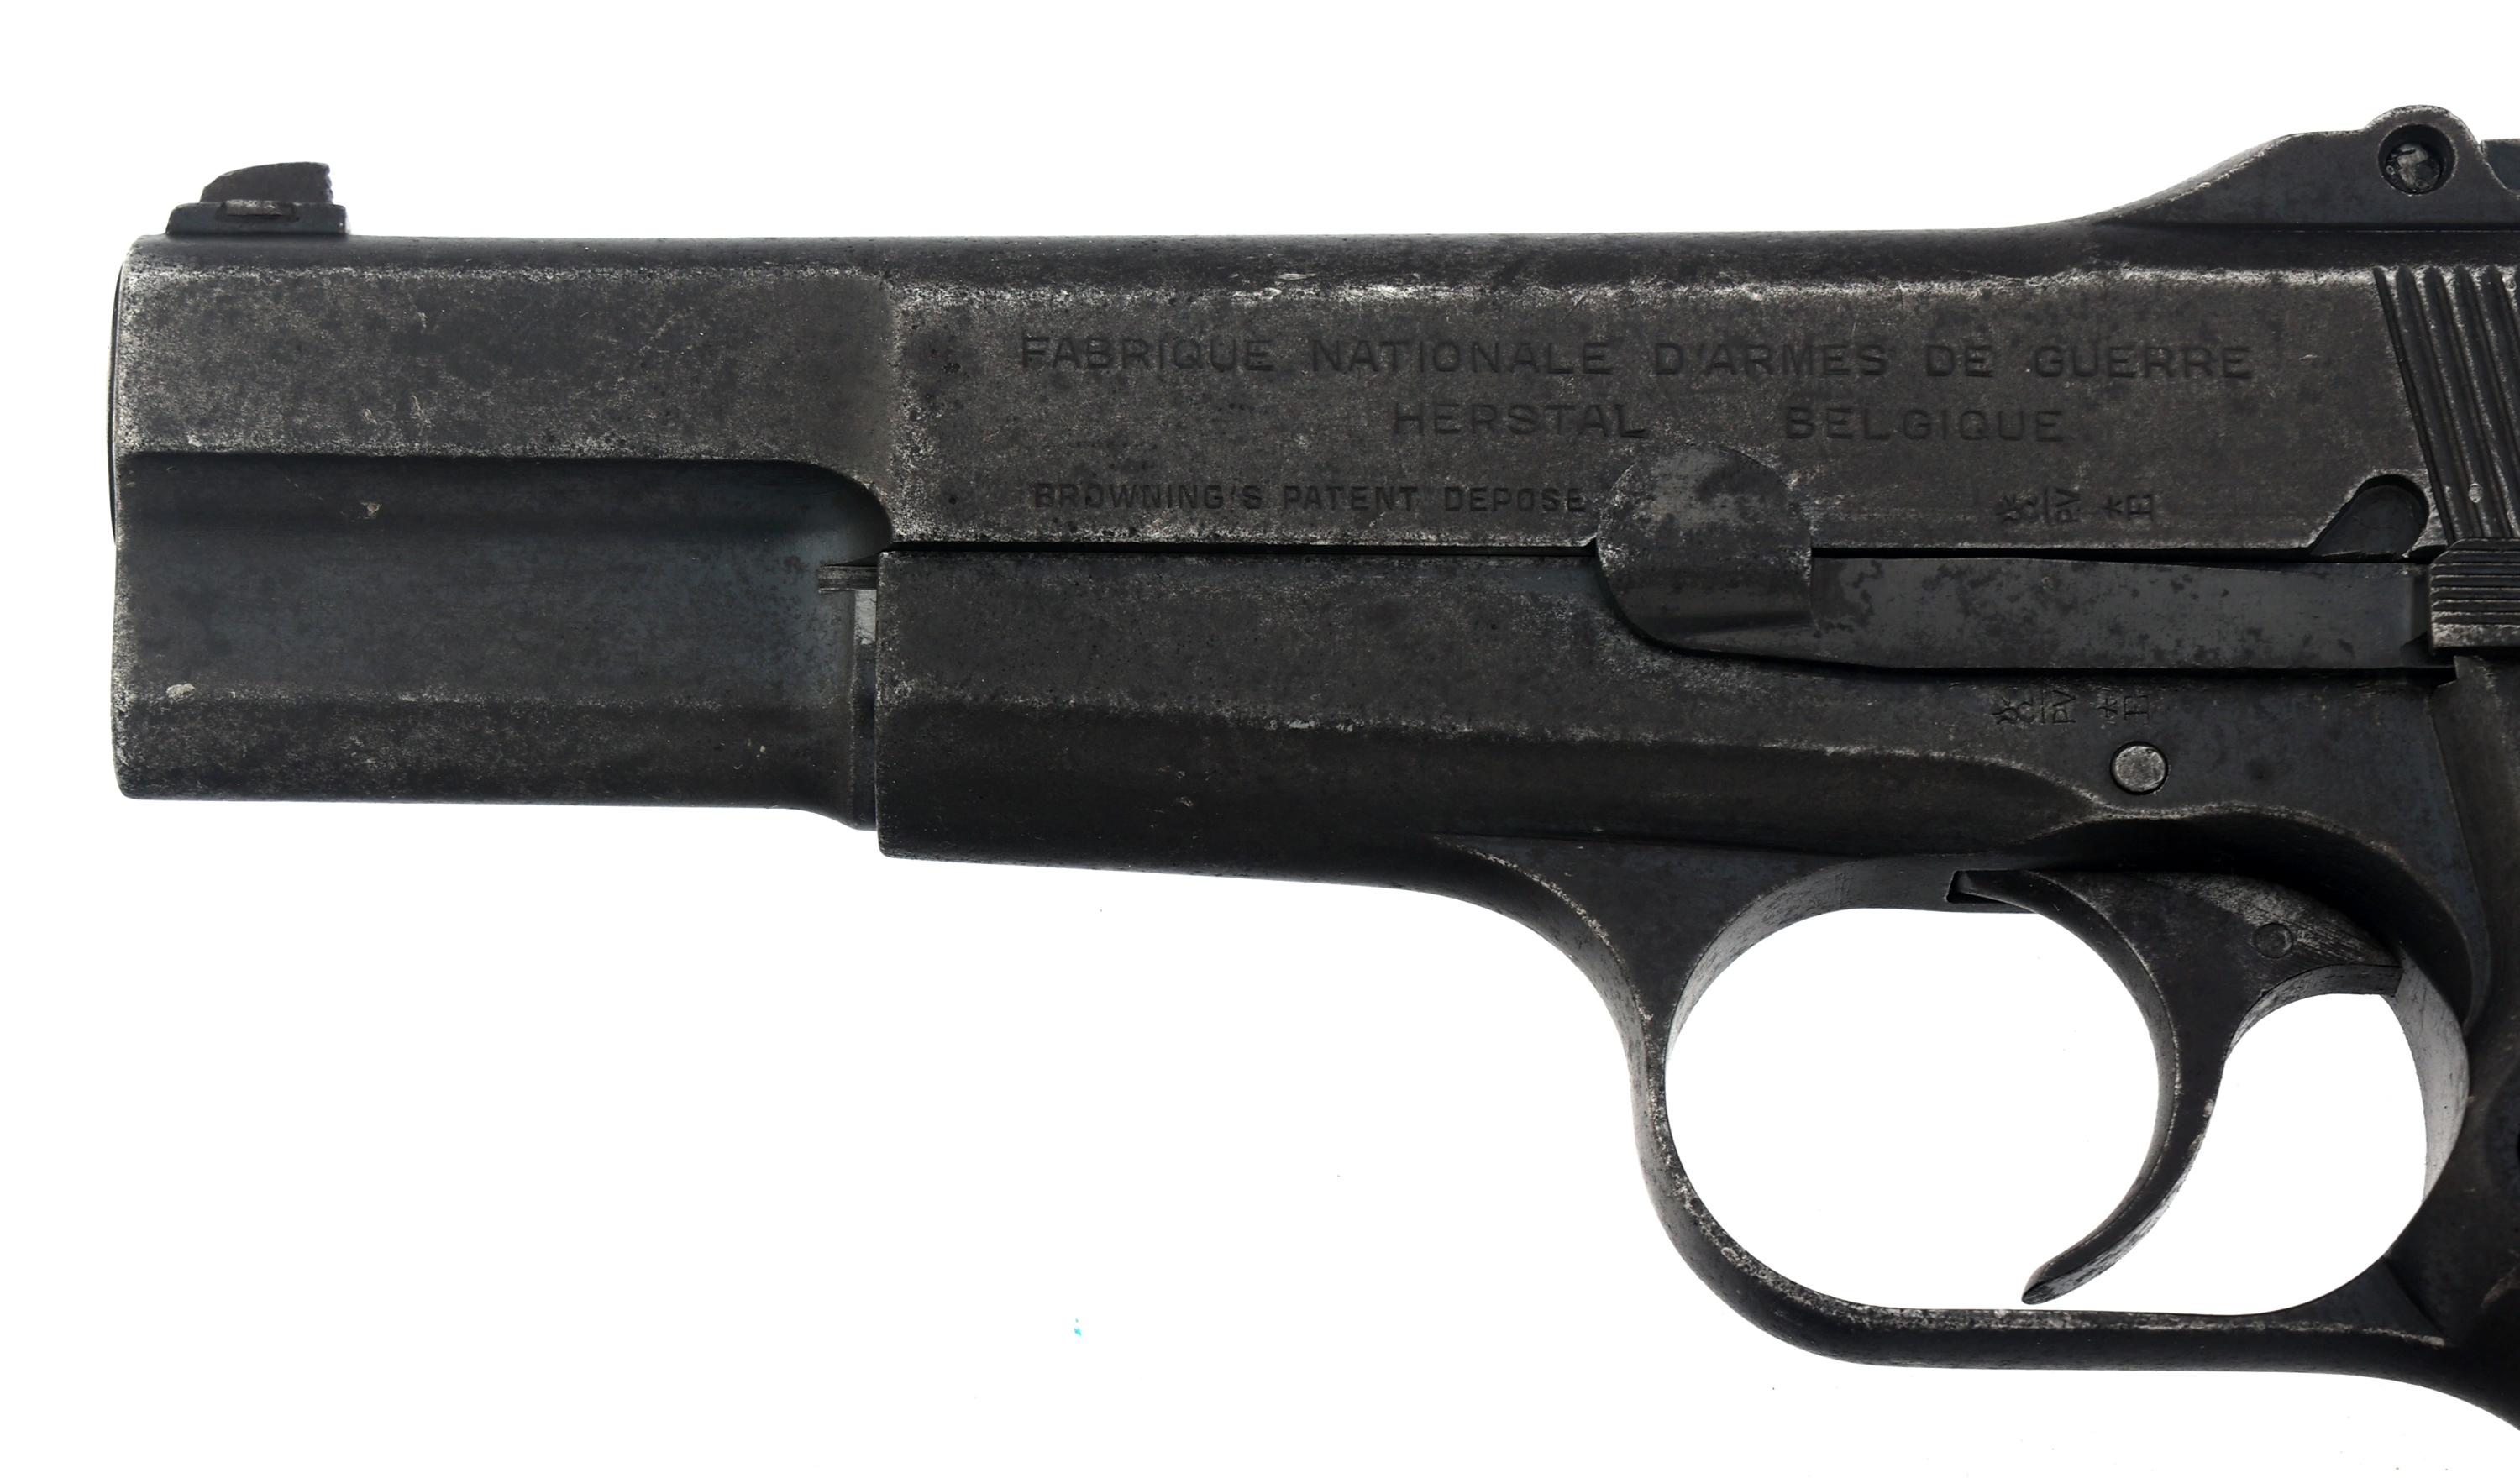 FN BROWNING MODEL HI POWER 9mm CALIBER PISTOL